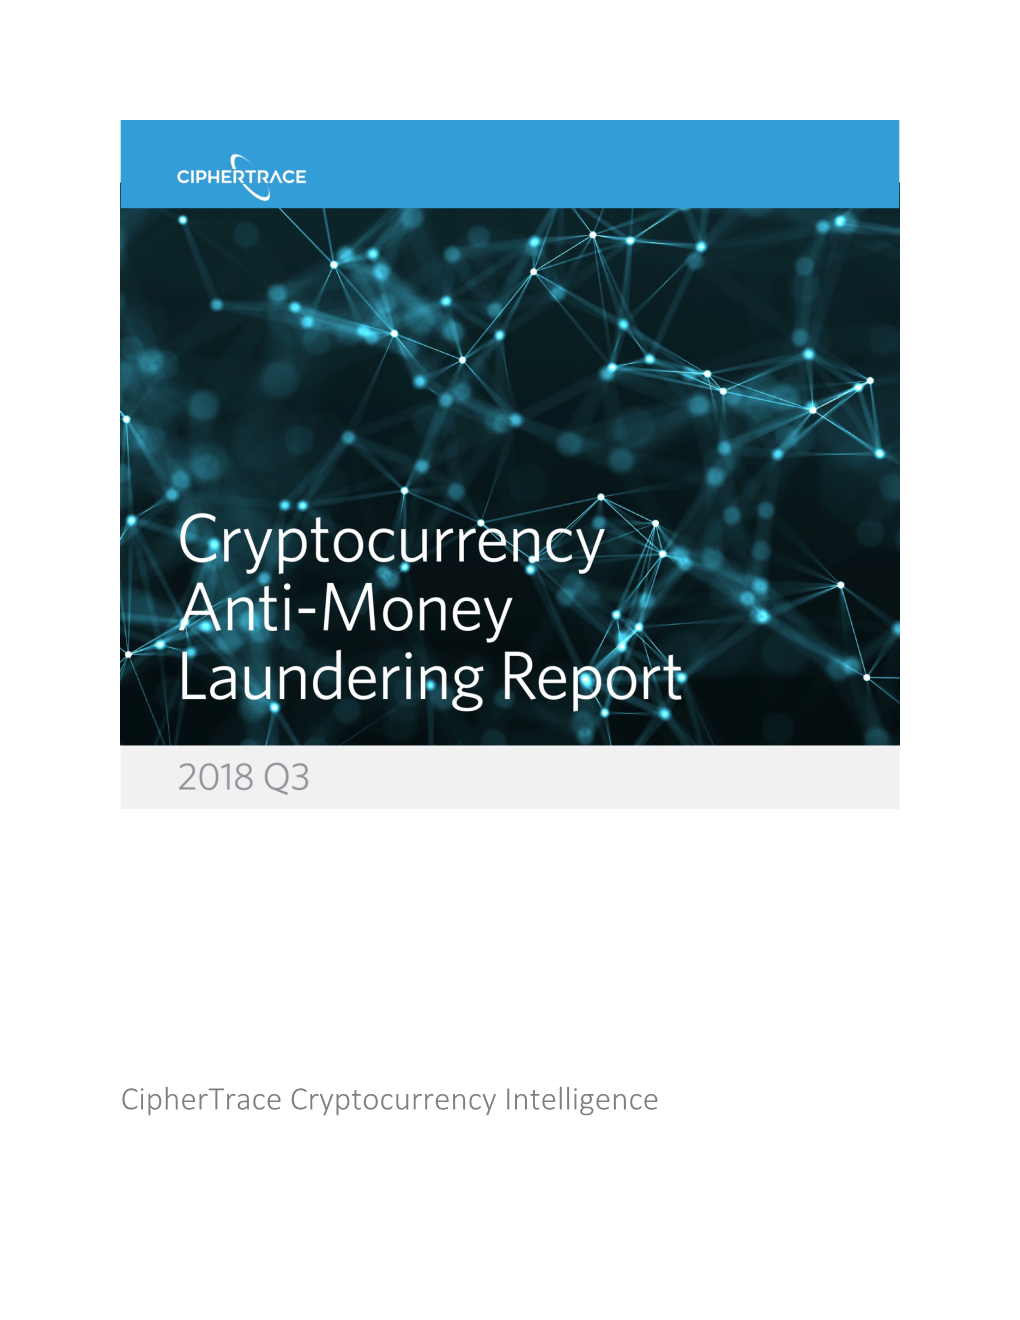 2018 Q3 Cryptocurrency Anti-Money Laundering Report Summary